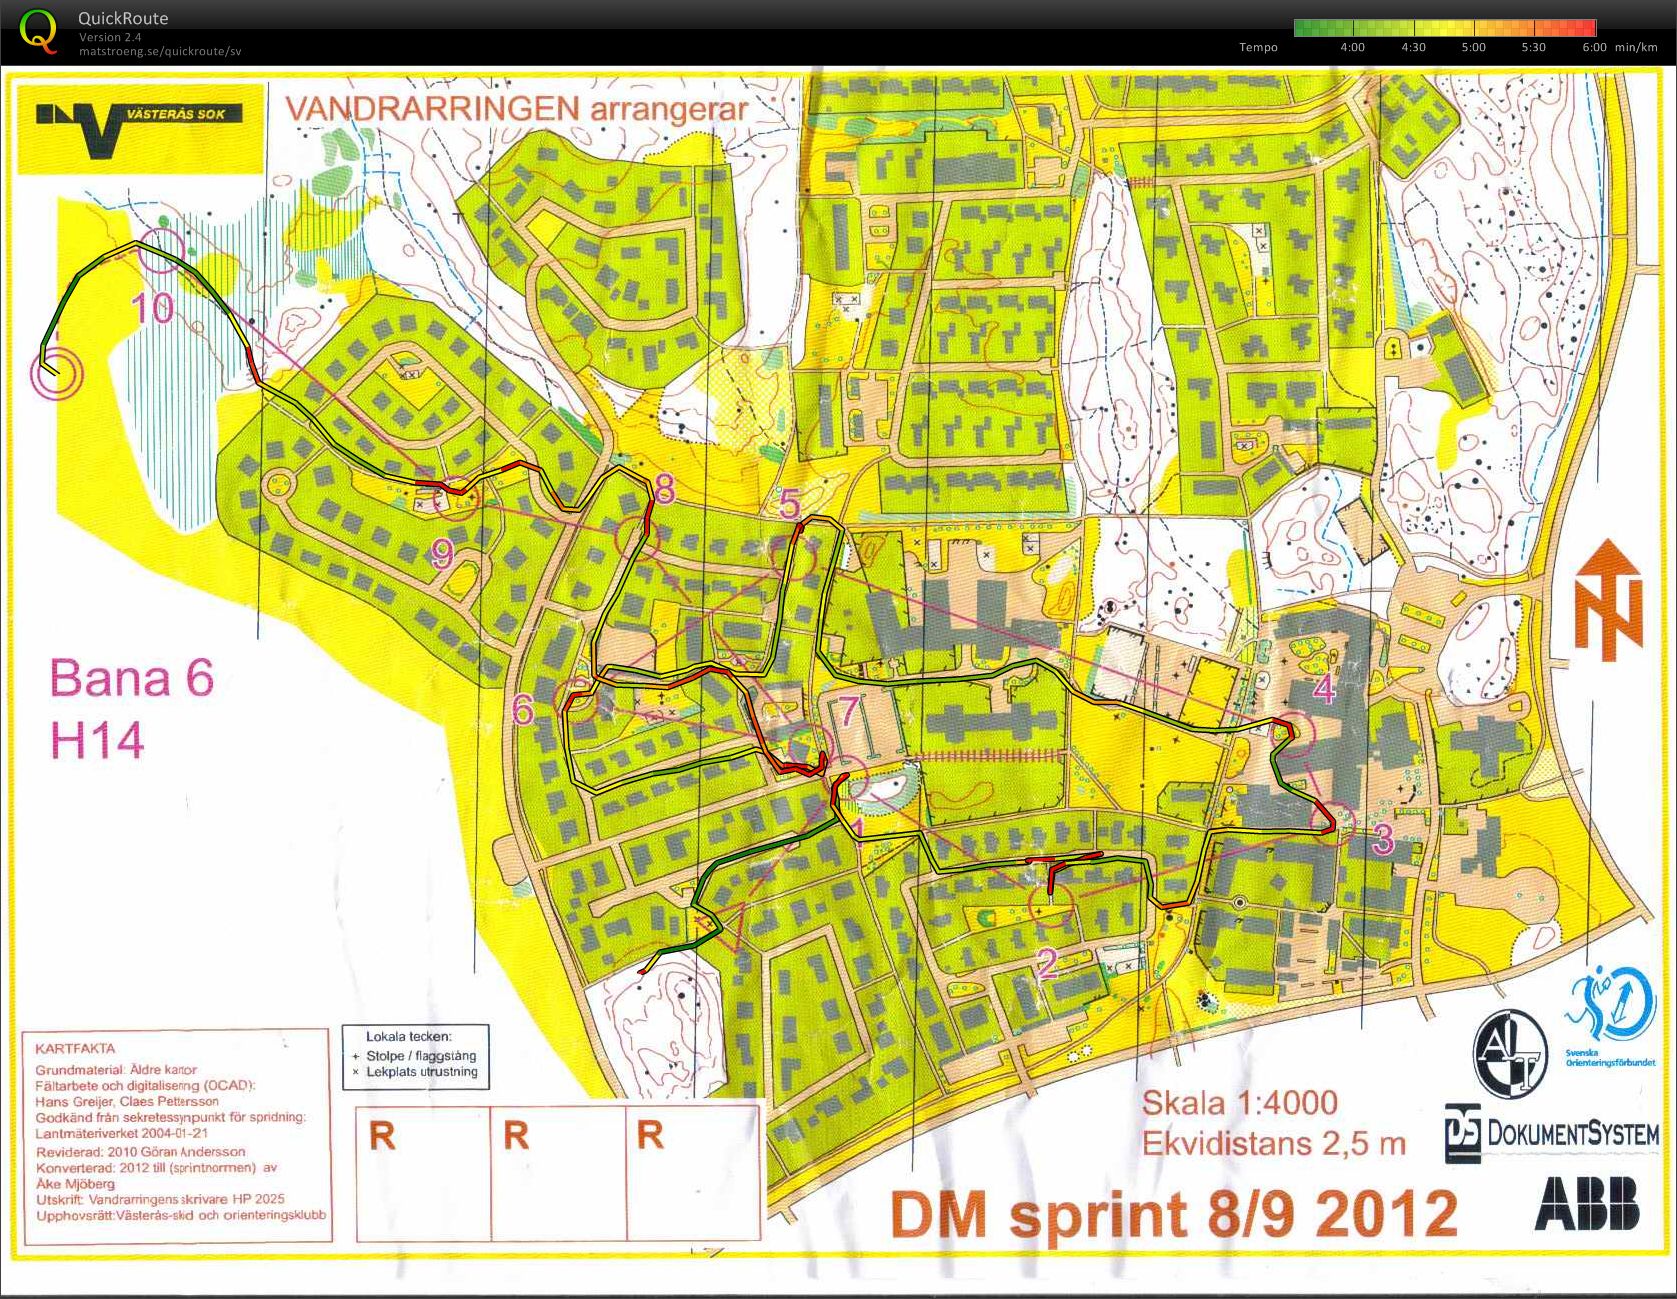 dm sprint 2012 (08-09-2012)